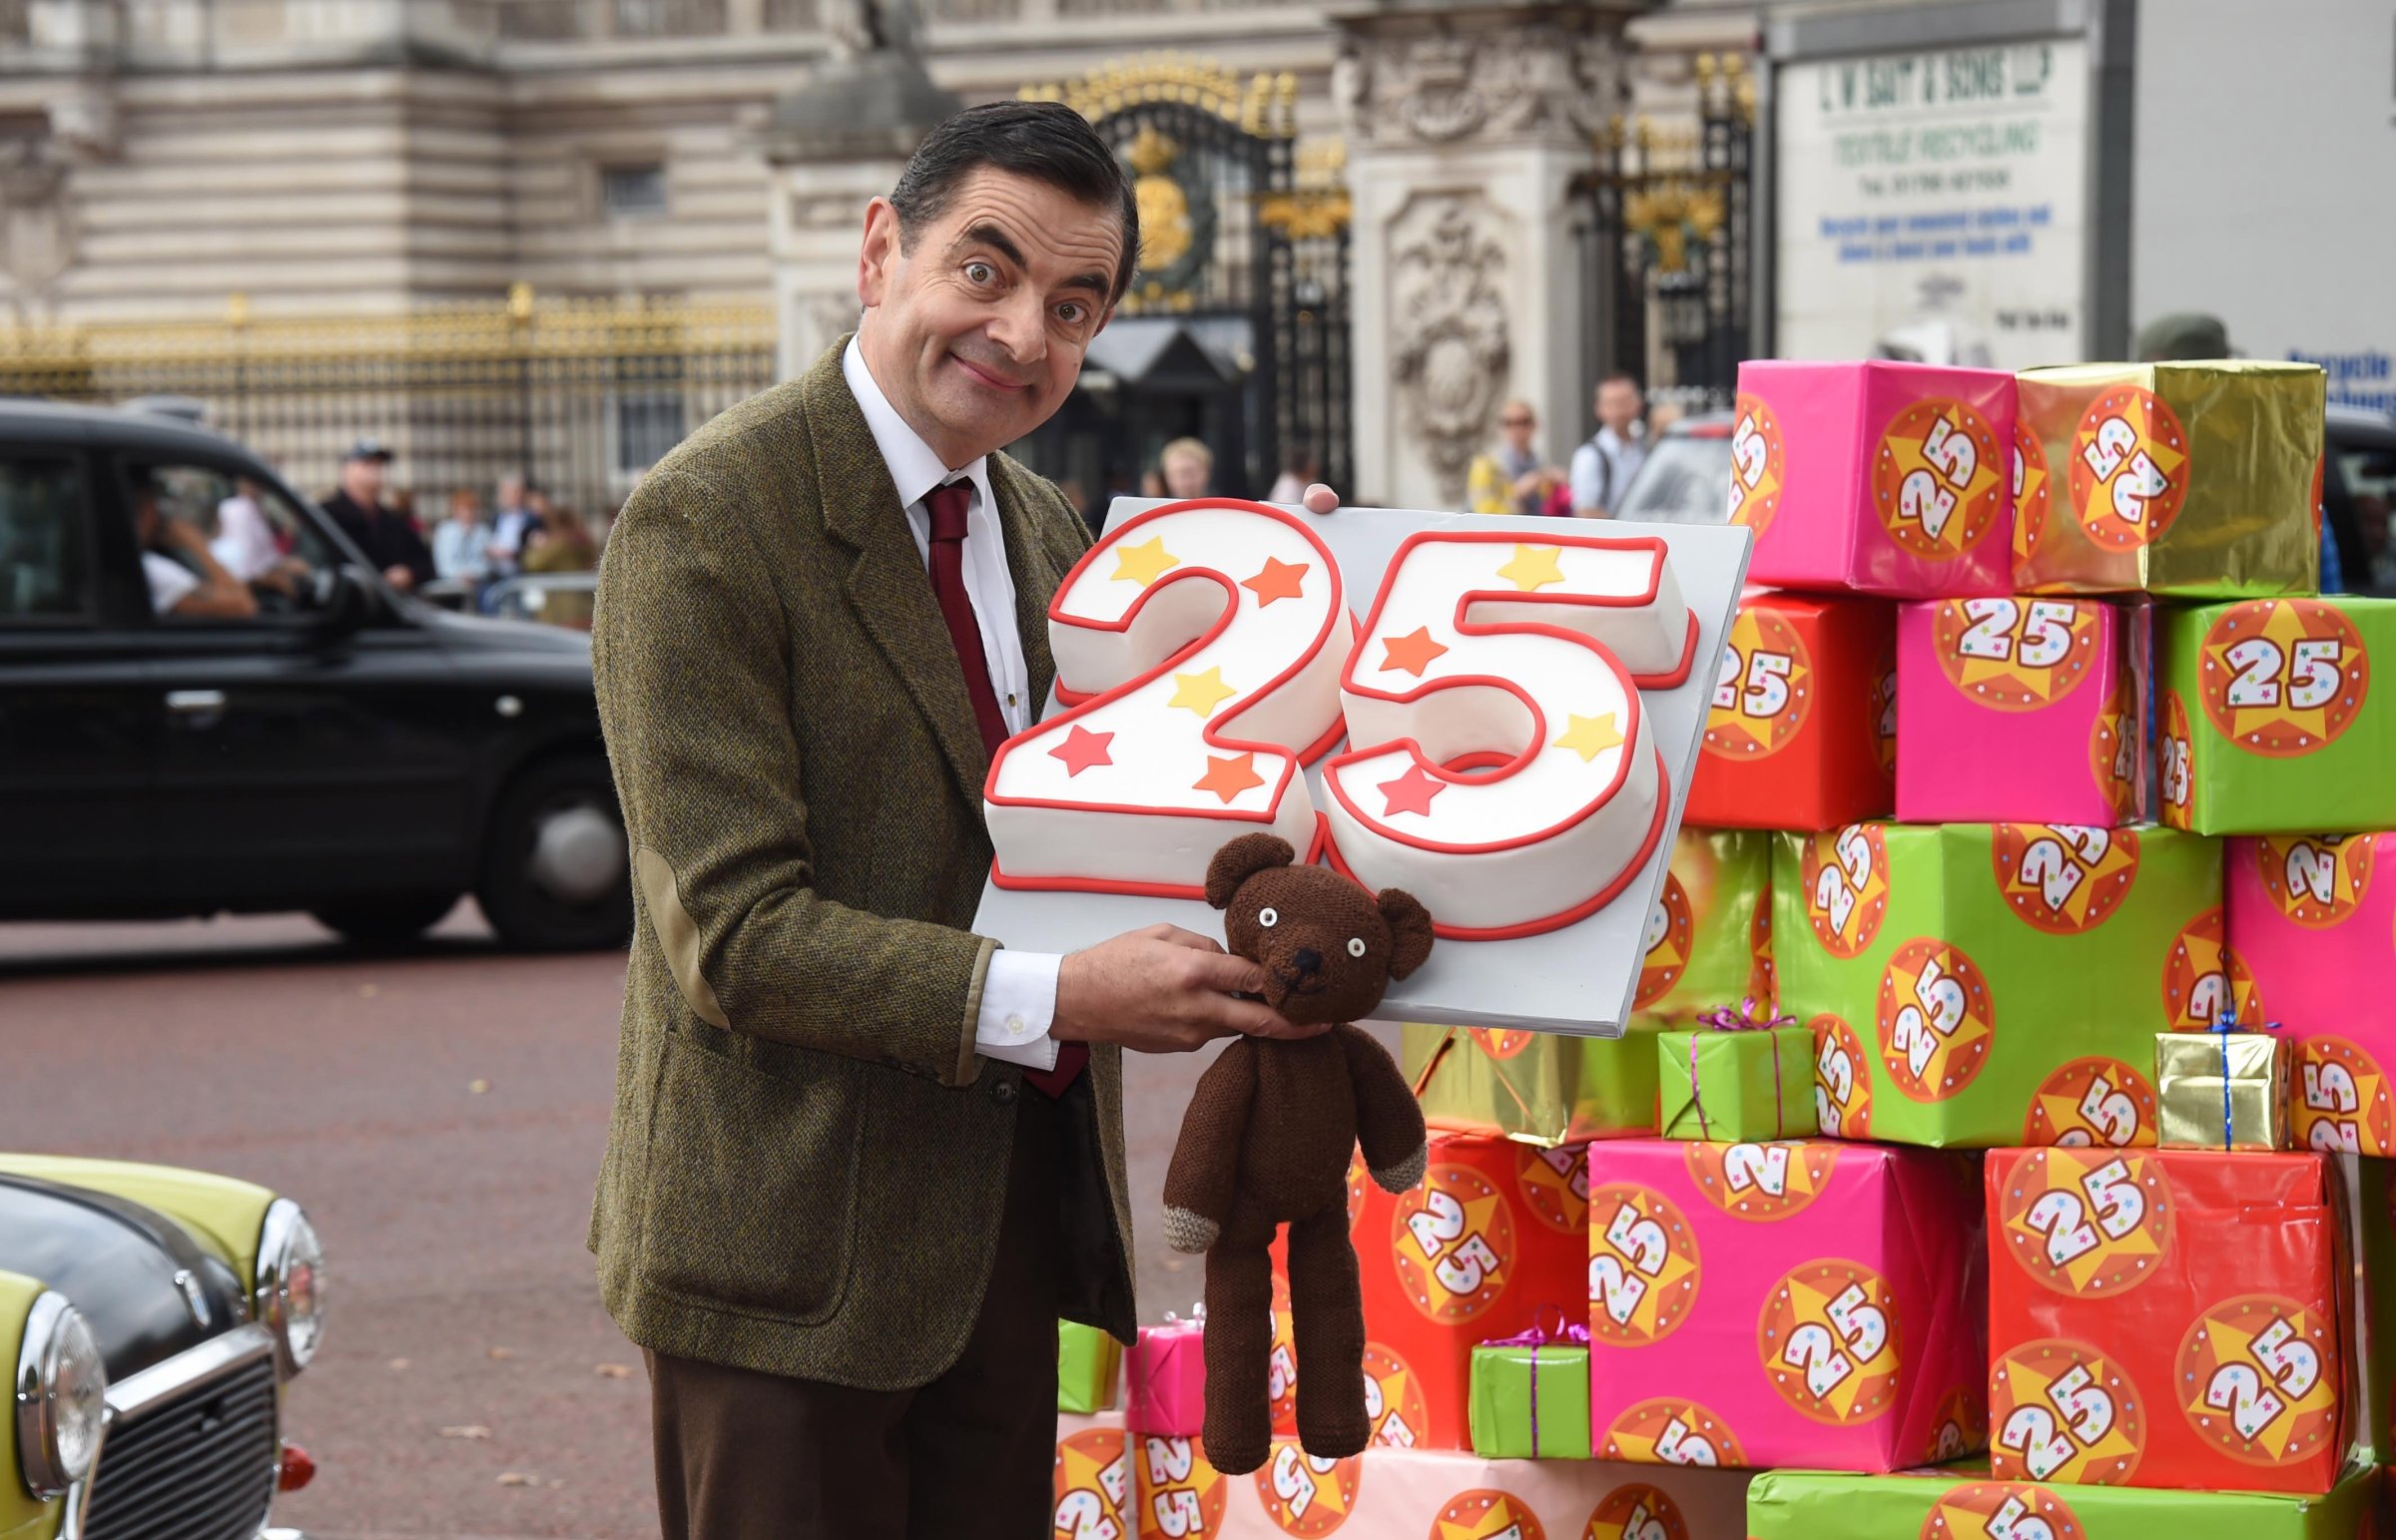 Rowan Atkinson's Mr. Bean Brings Mayhem To The Mall